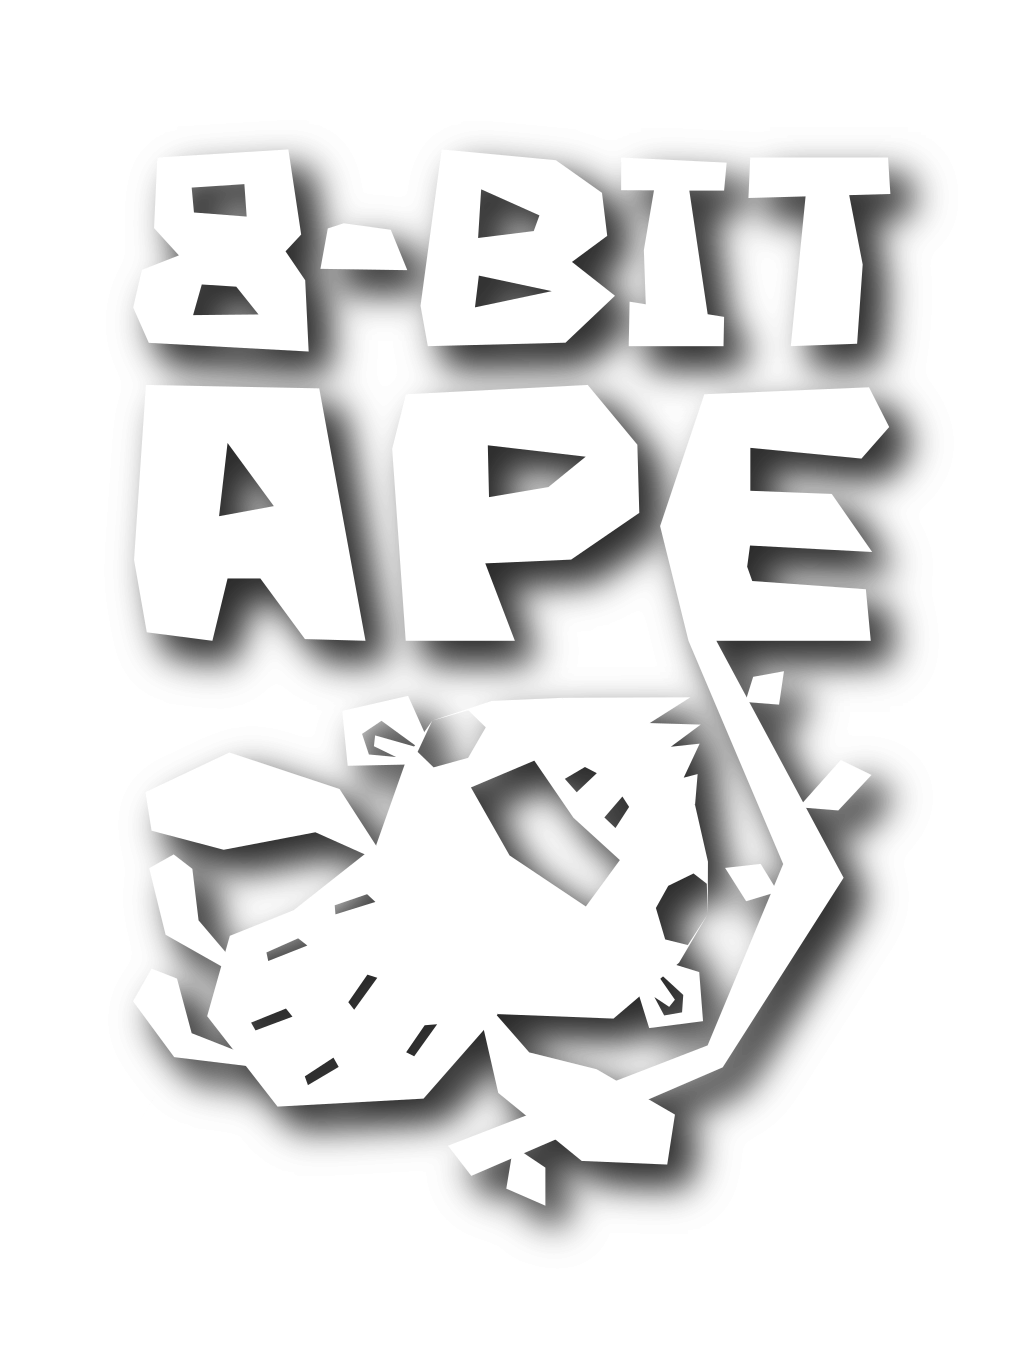 The 8-Bit Ape logo.